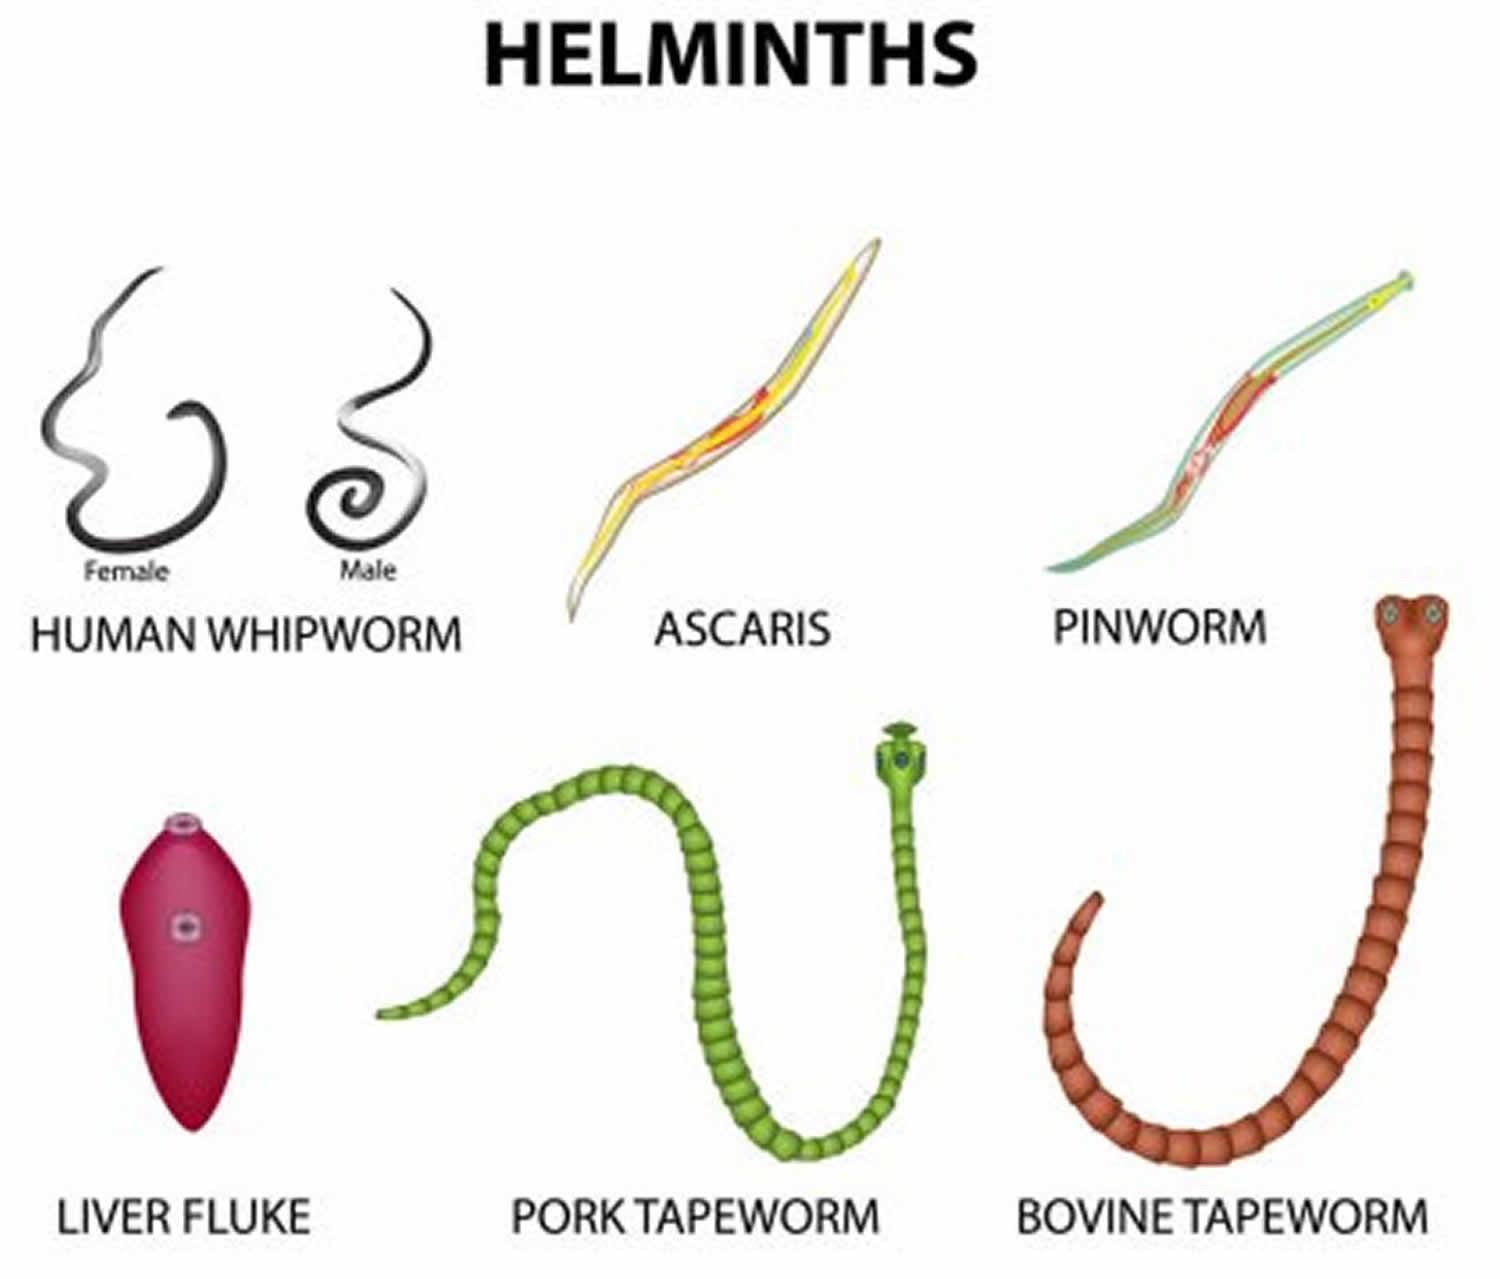 Helminth worm define - Define helminth in medical terms - Papilloma virus perdite